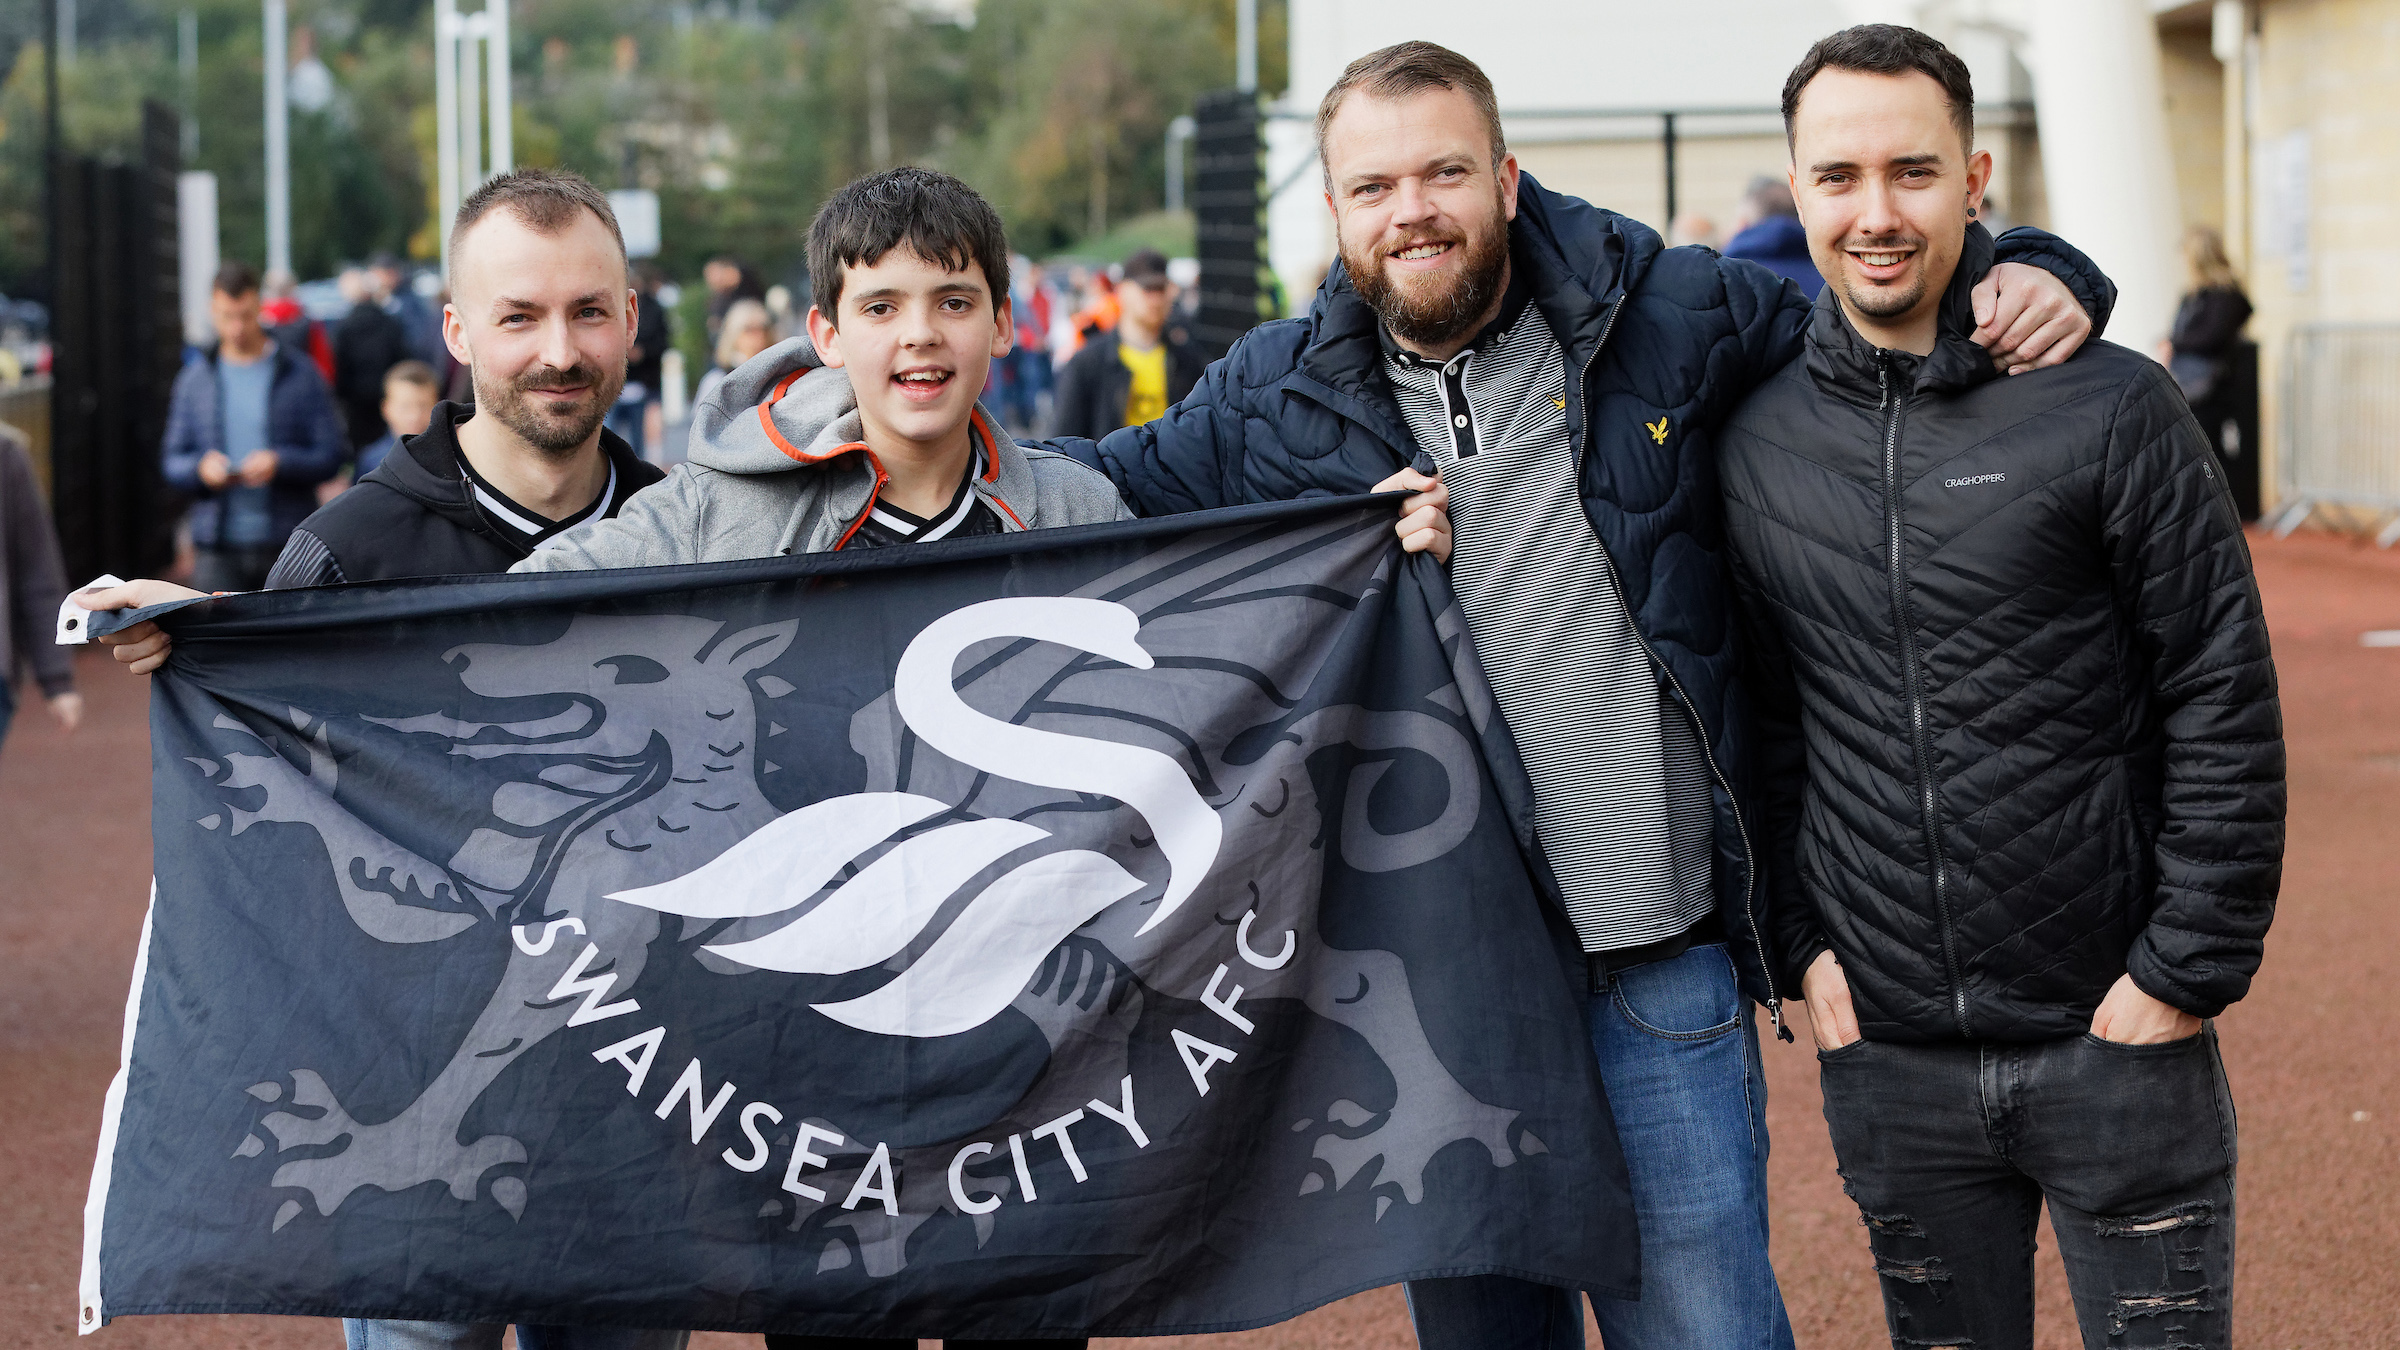 Swansea City fans supporters 